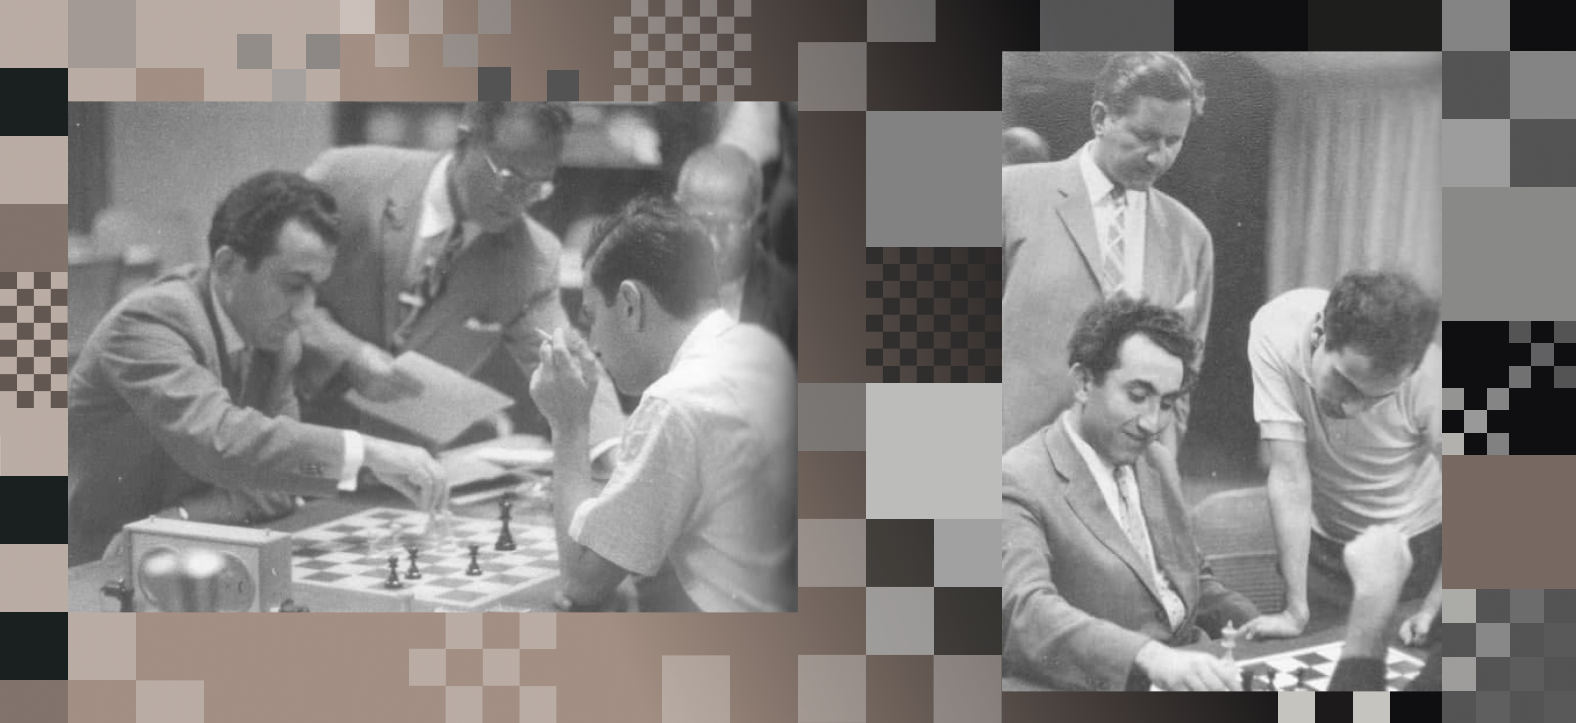 Карпов корчной 1978 счет. Фишер Корчной 1962. Гроссмейстер 1972 Корчной.